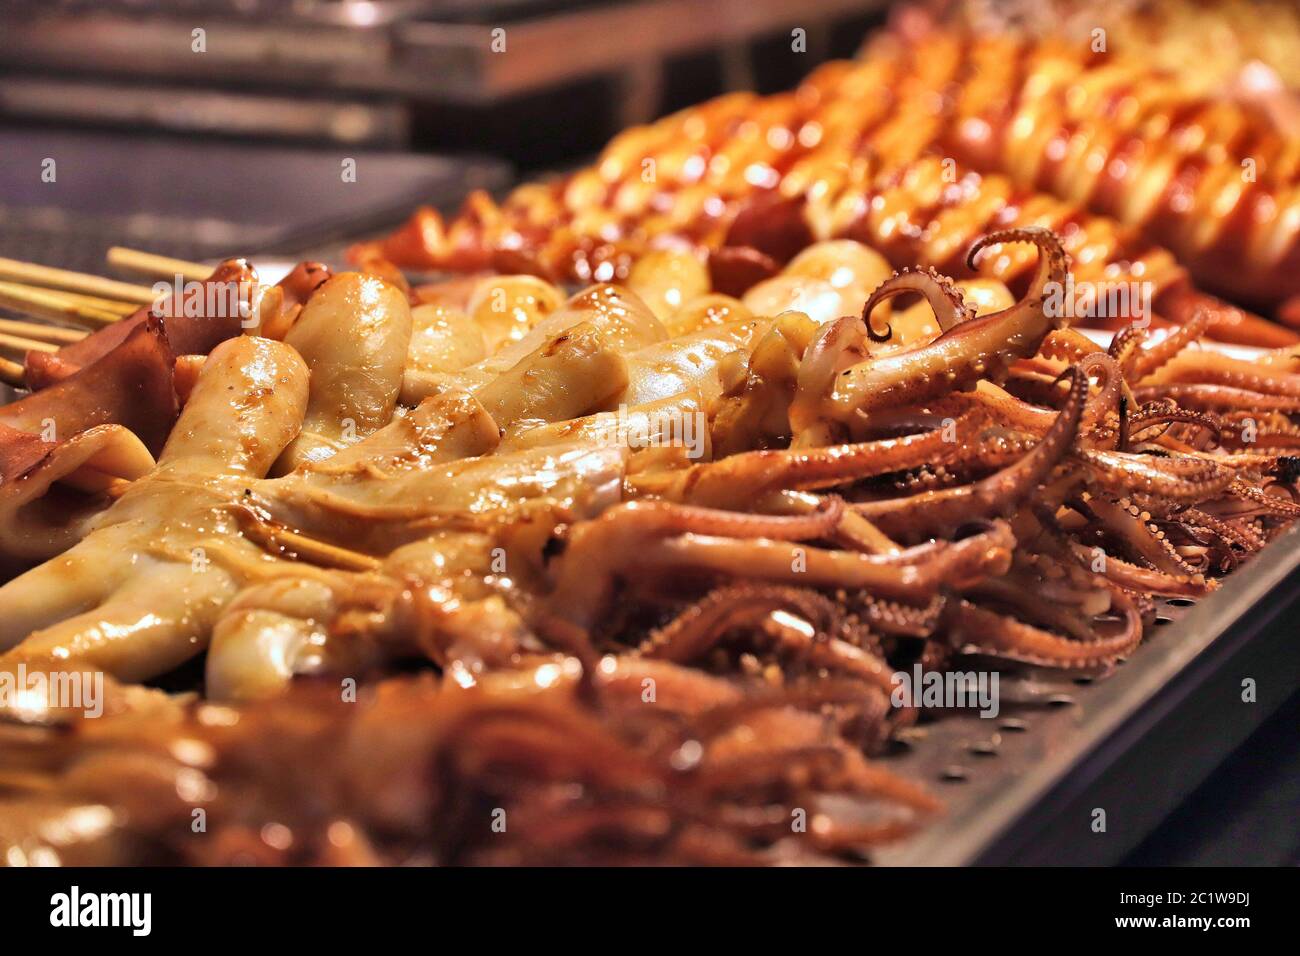 Taiwan night food market - Raohe Night Market in Taipei. Grilled squid and octopus on stick. Stock Photo